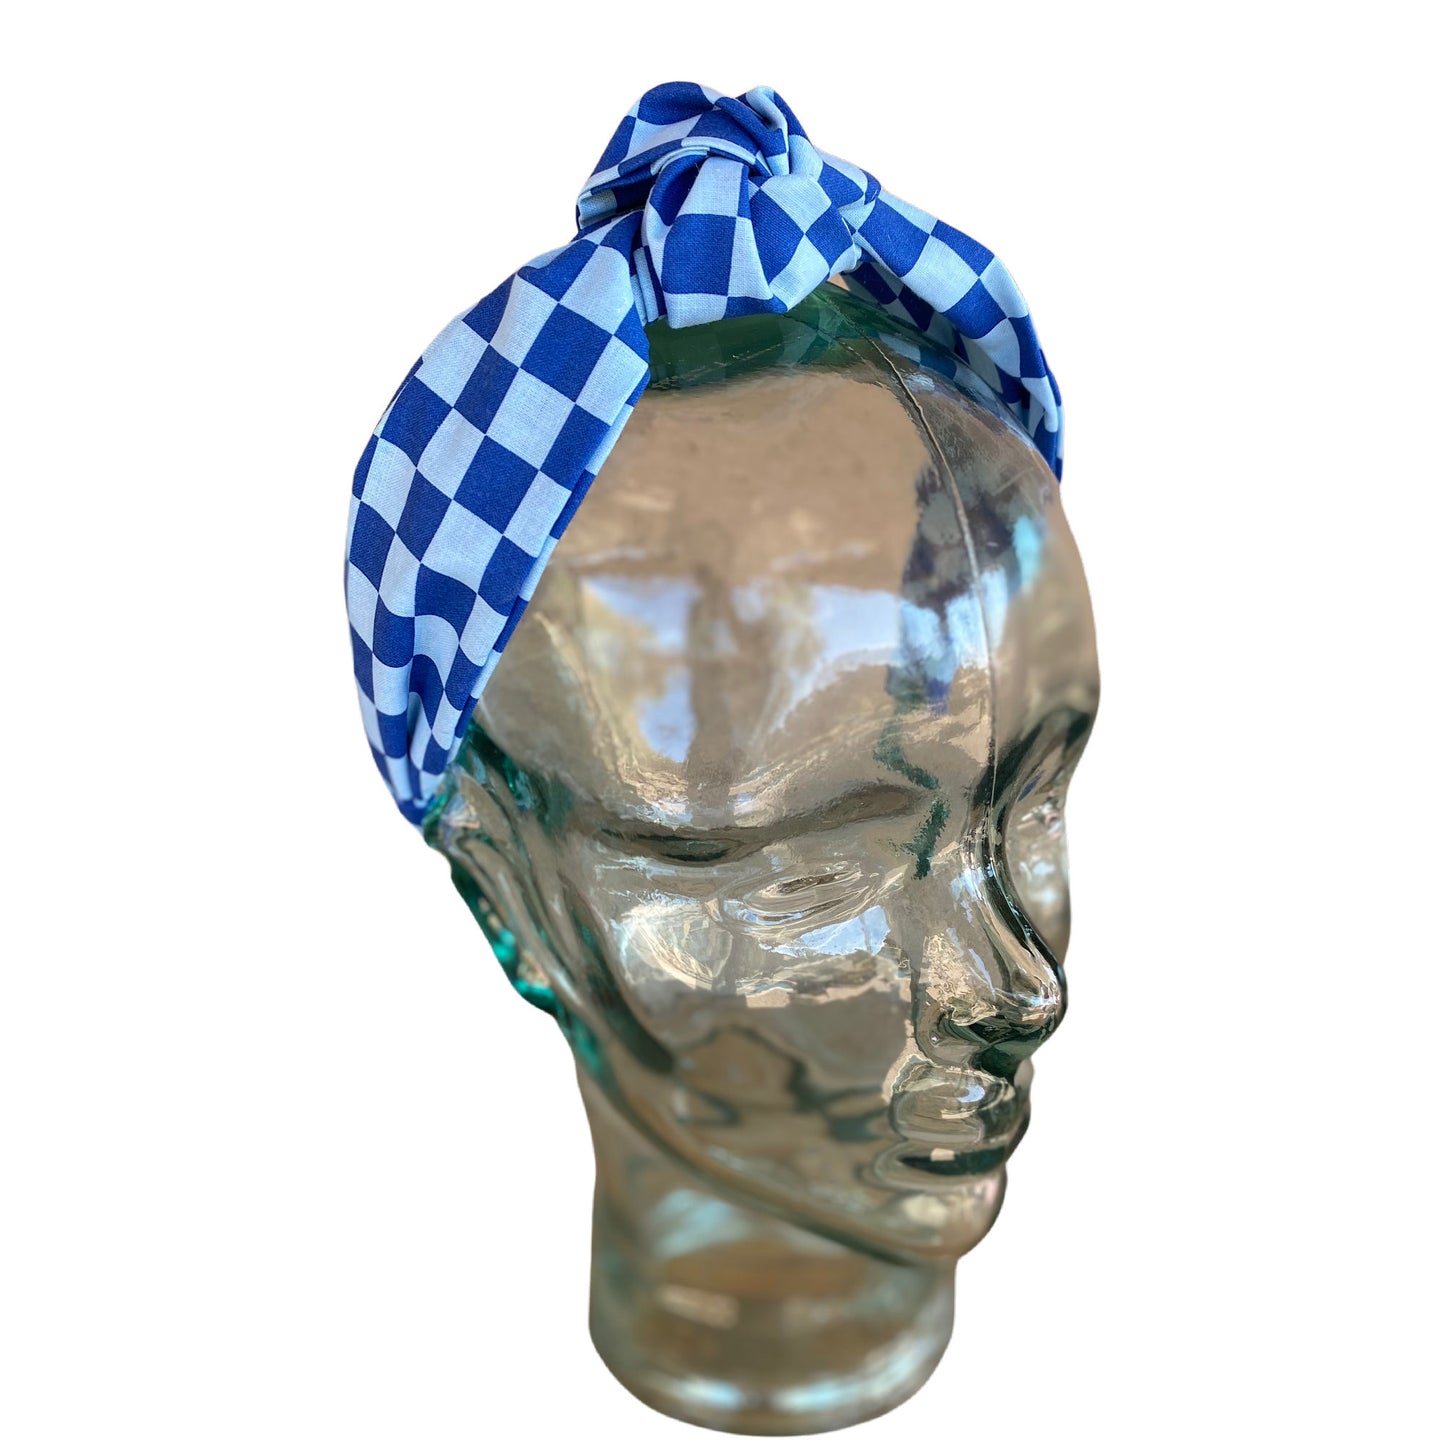 Royal Blue Checkerboard Top Knot Headband